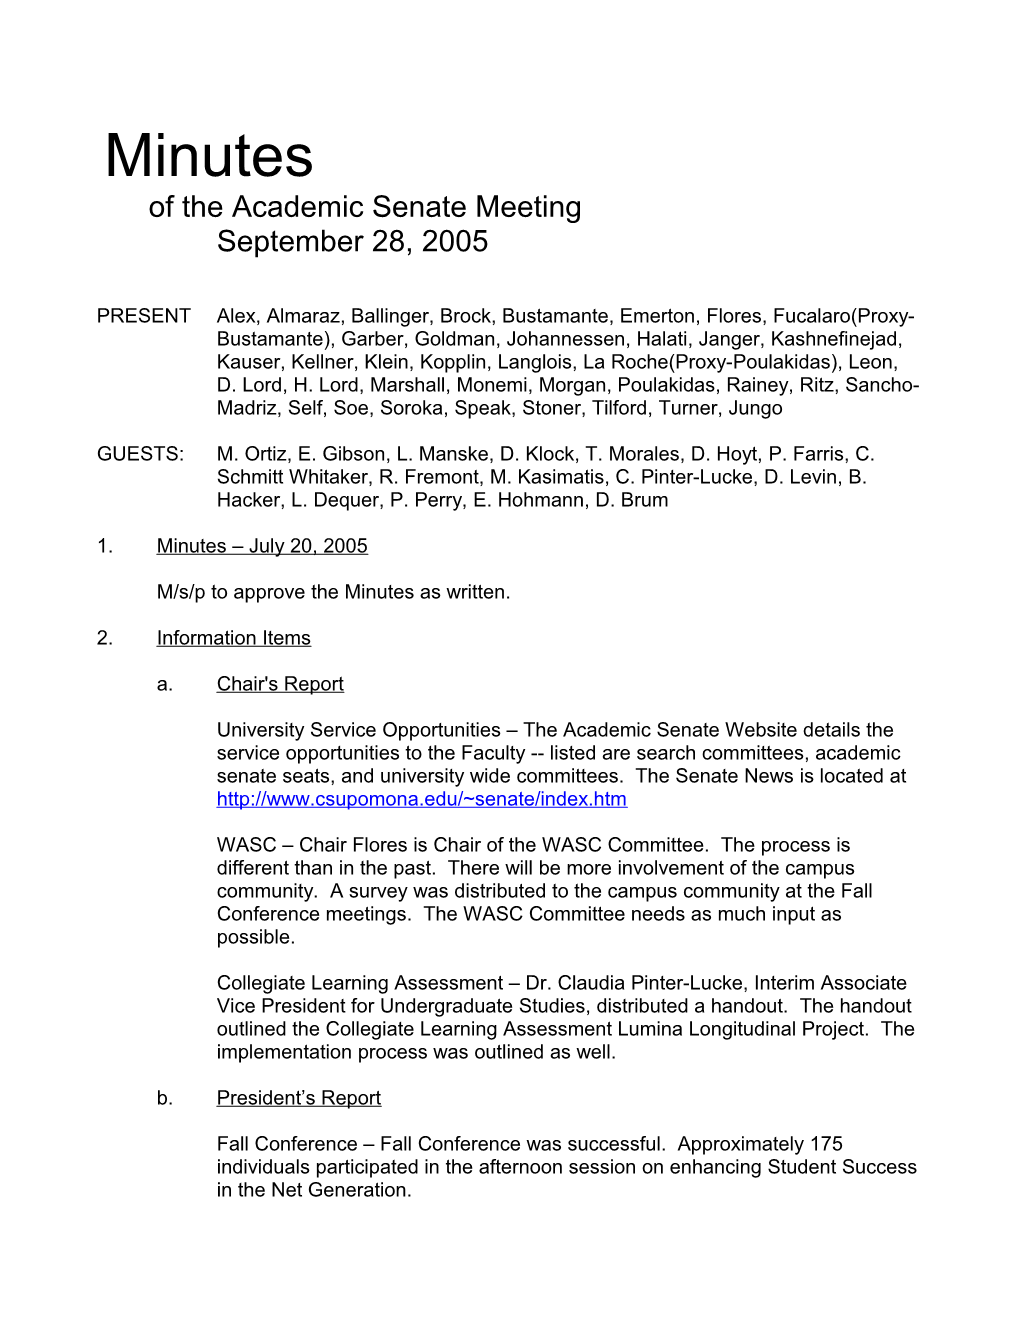 Academic Senate Minutes September 28, 2005